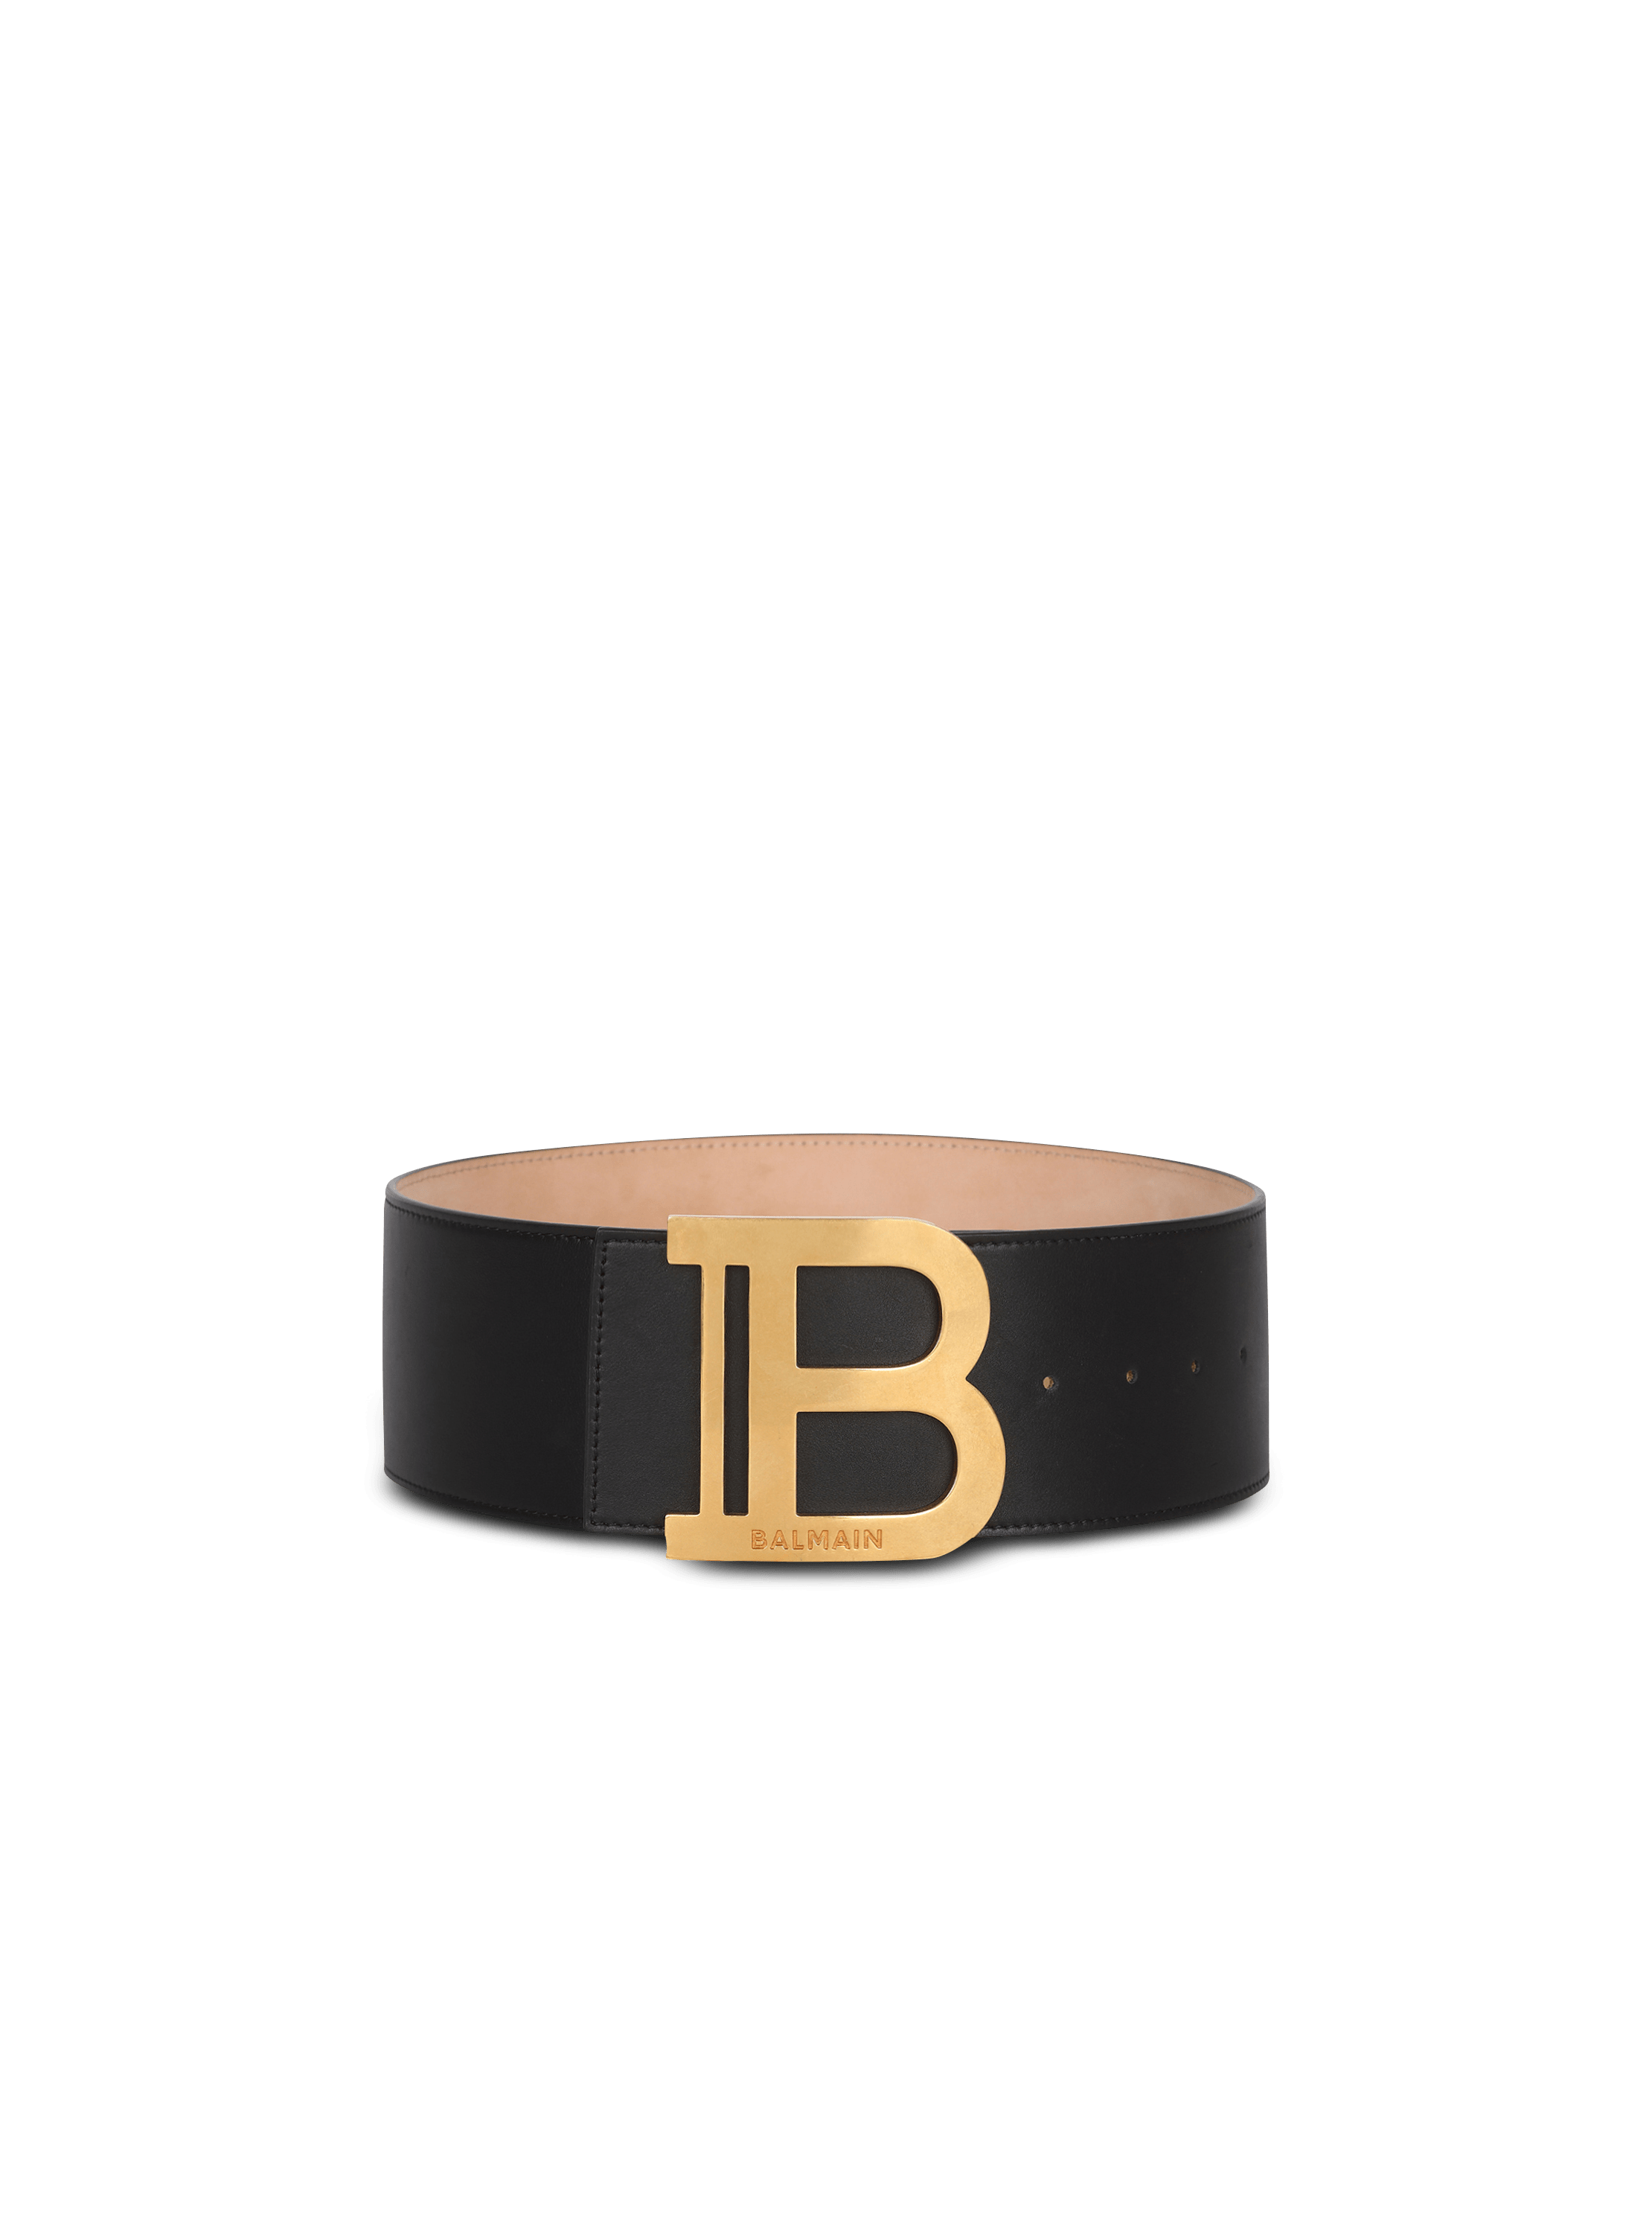 B-Belt in leather